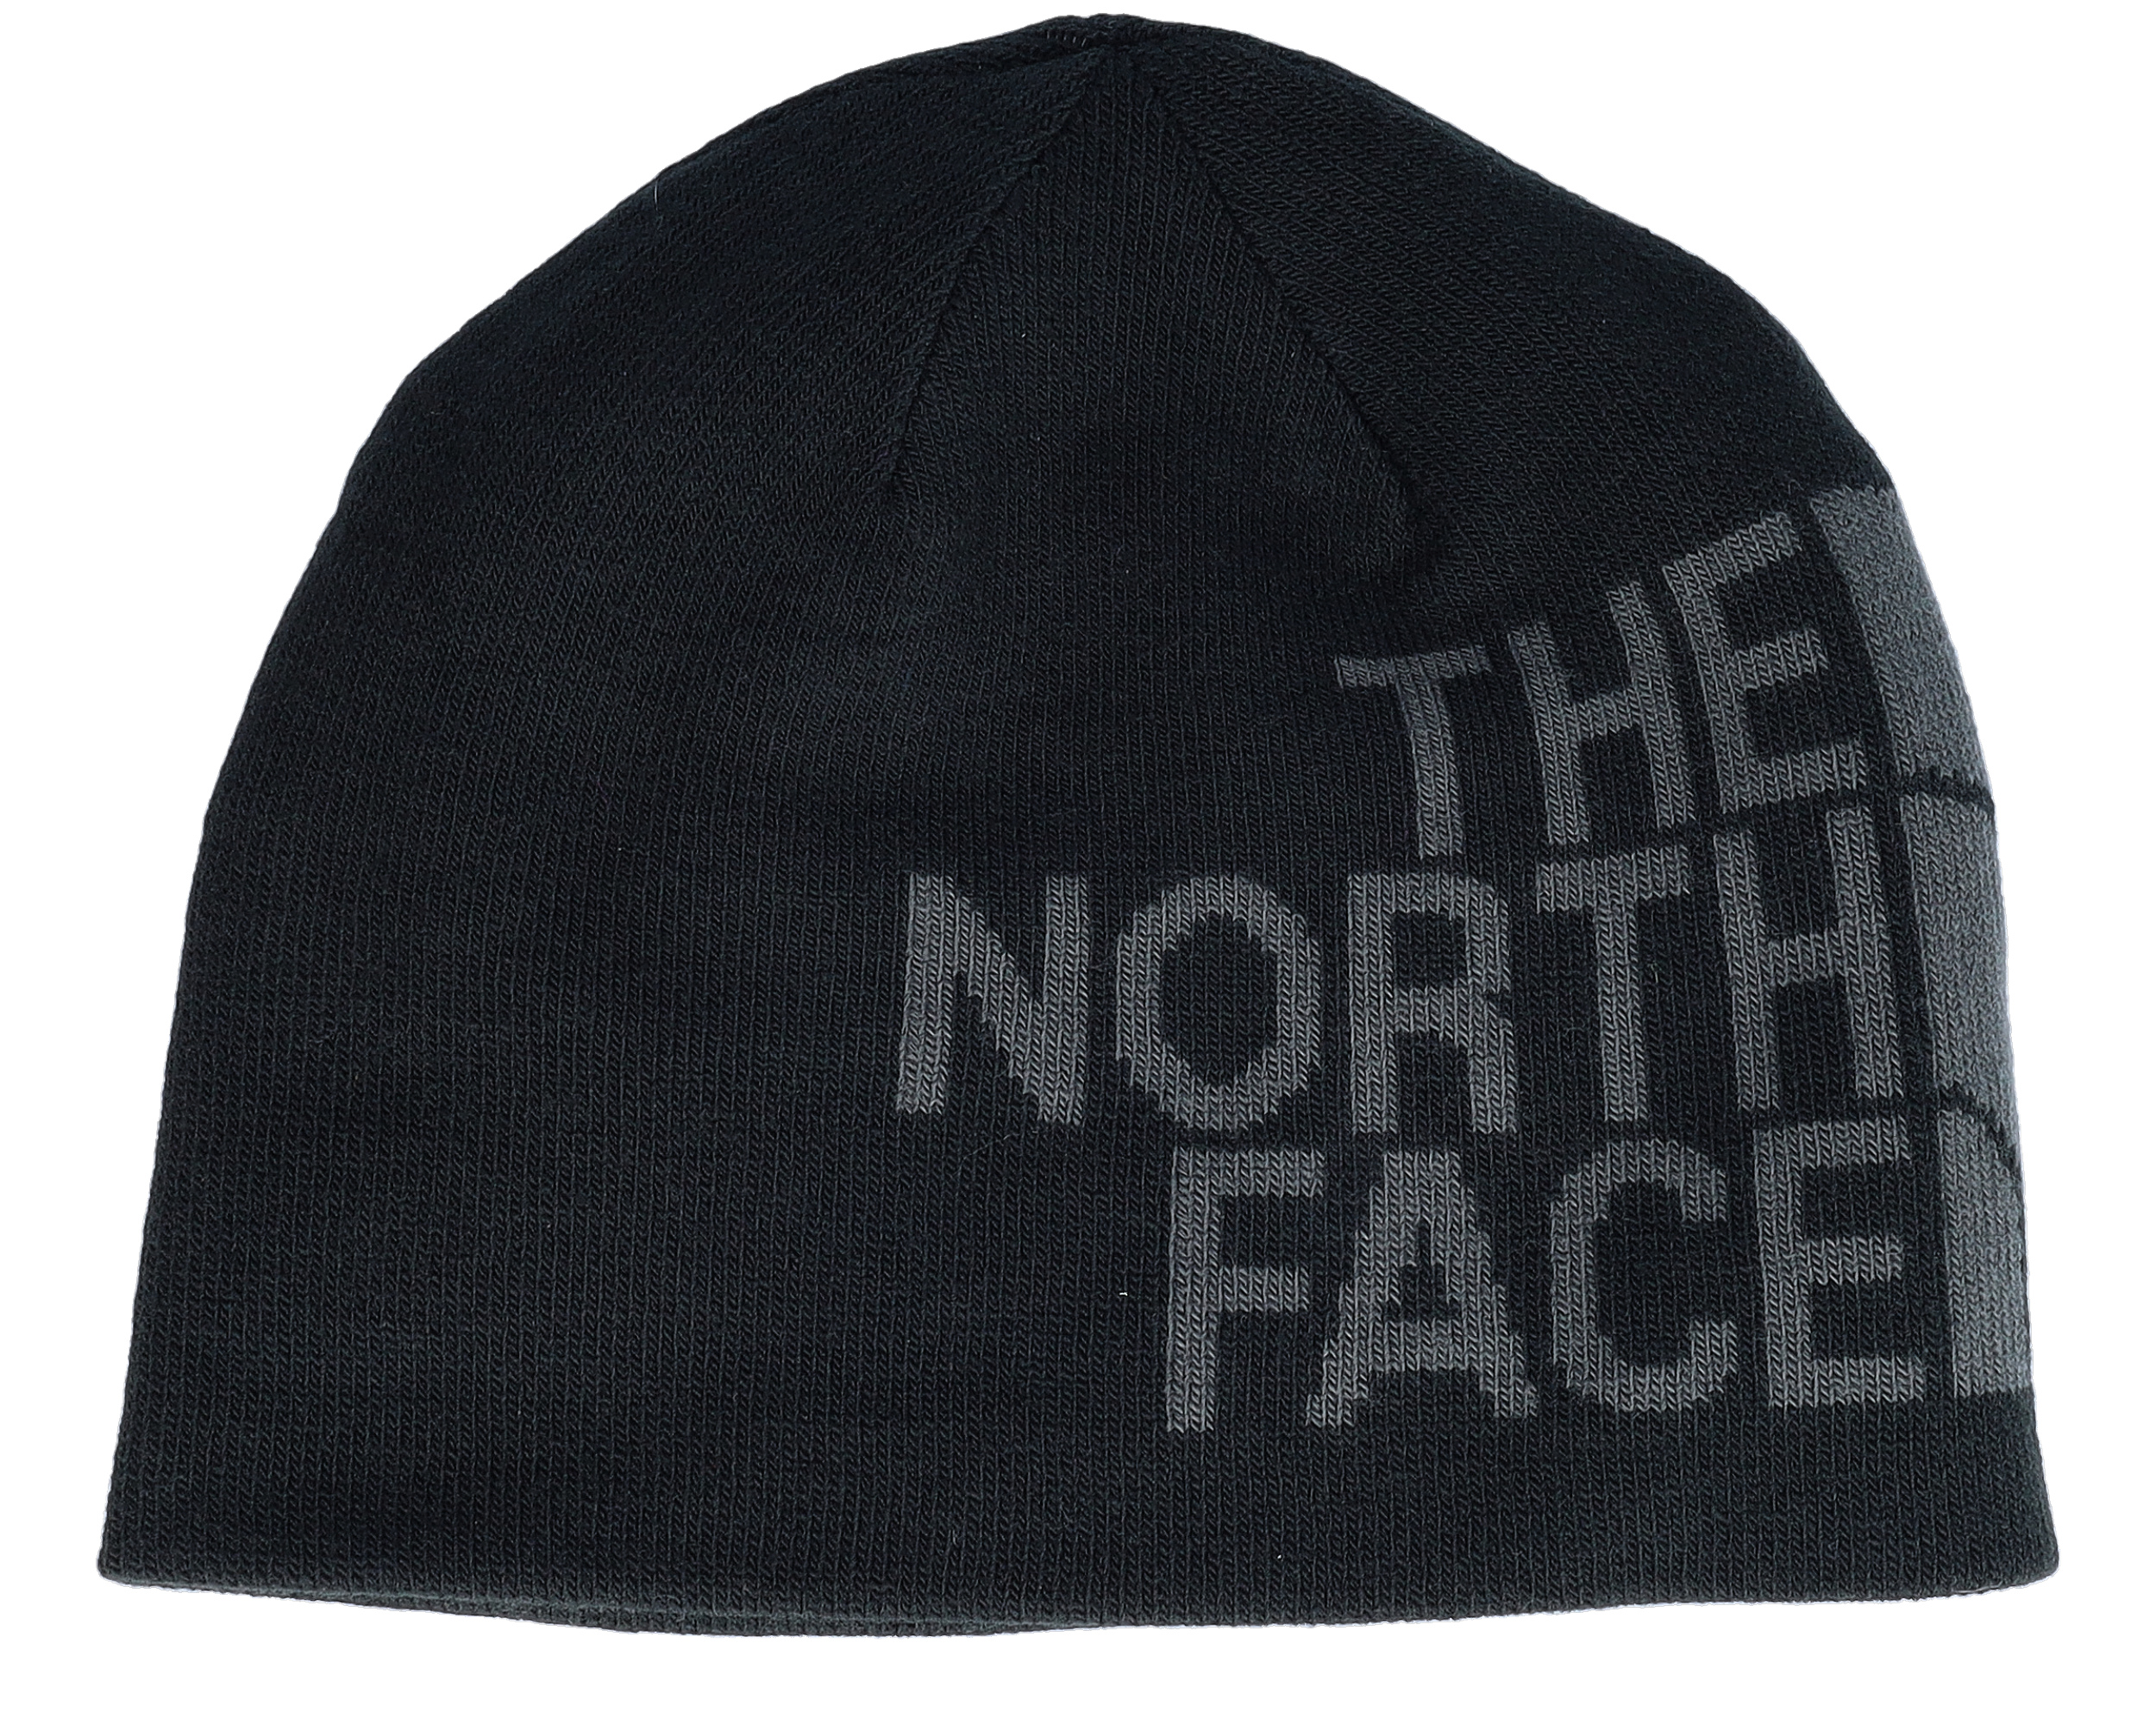 Reversible Banner Black/Charcoal Beanie - The North Face - Bonnet